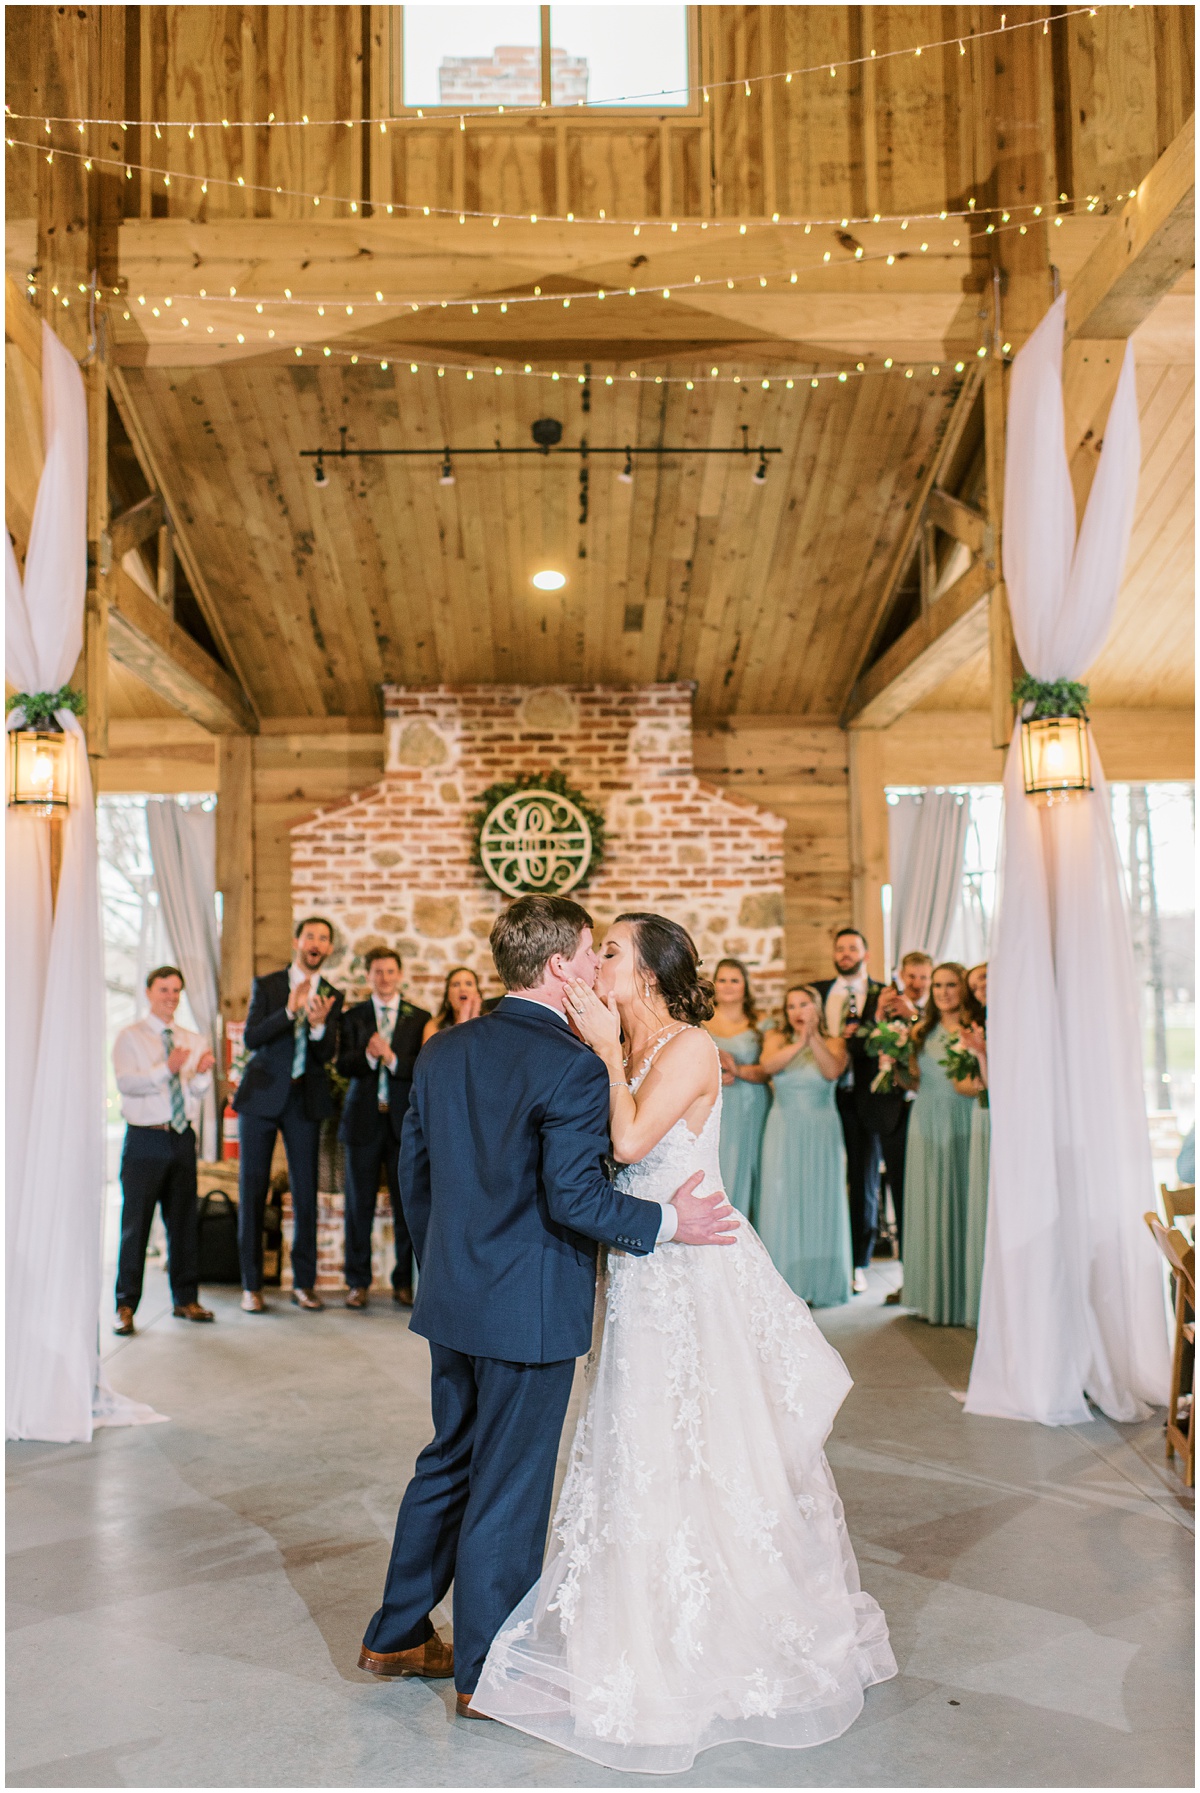 Bride & groom first dance | rustic romantic barn reception